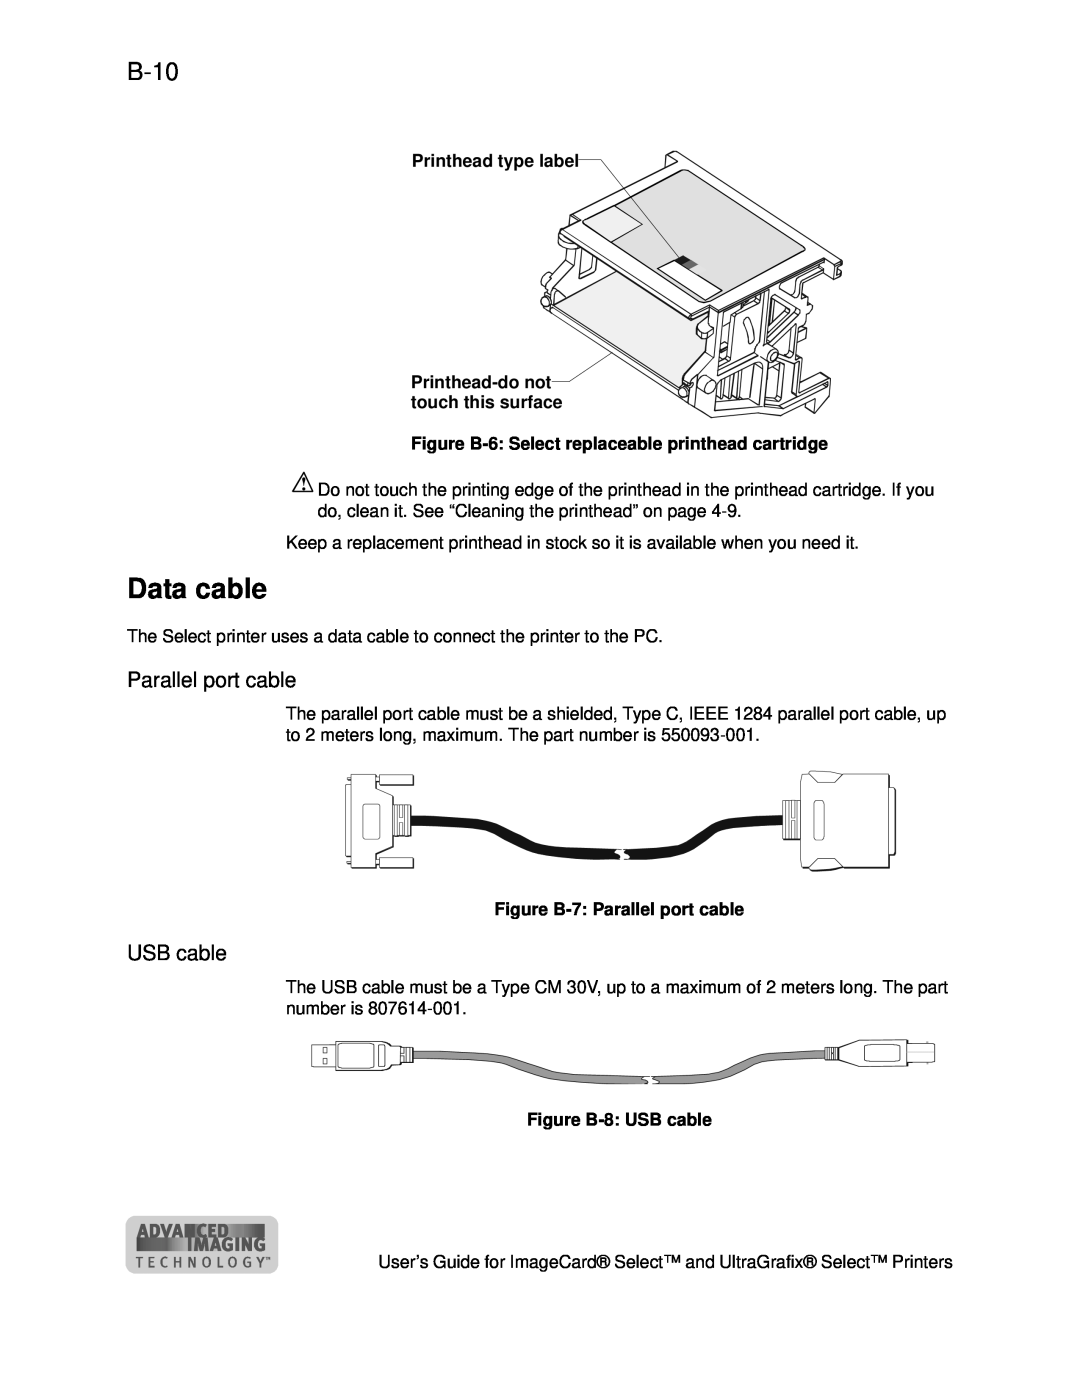 Datacard Group ImageCard SelectTM and UltraGrafix SelectTM Printers manual Data cable, B-10, Parallel port cable, USB cable 